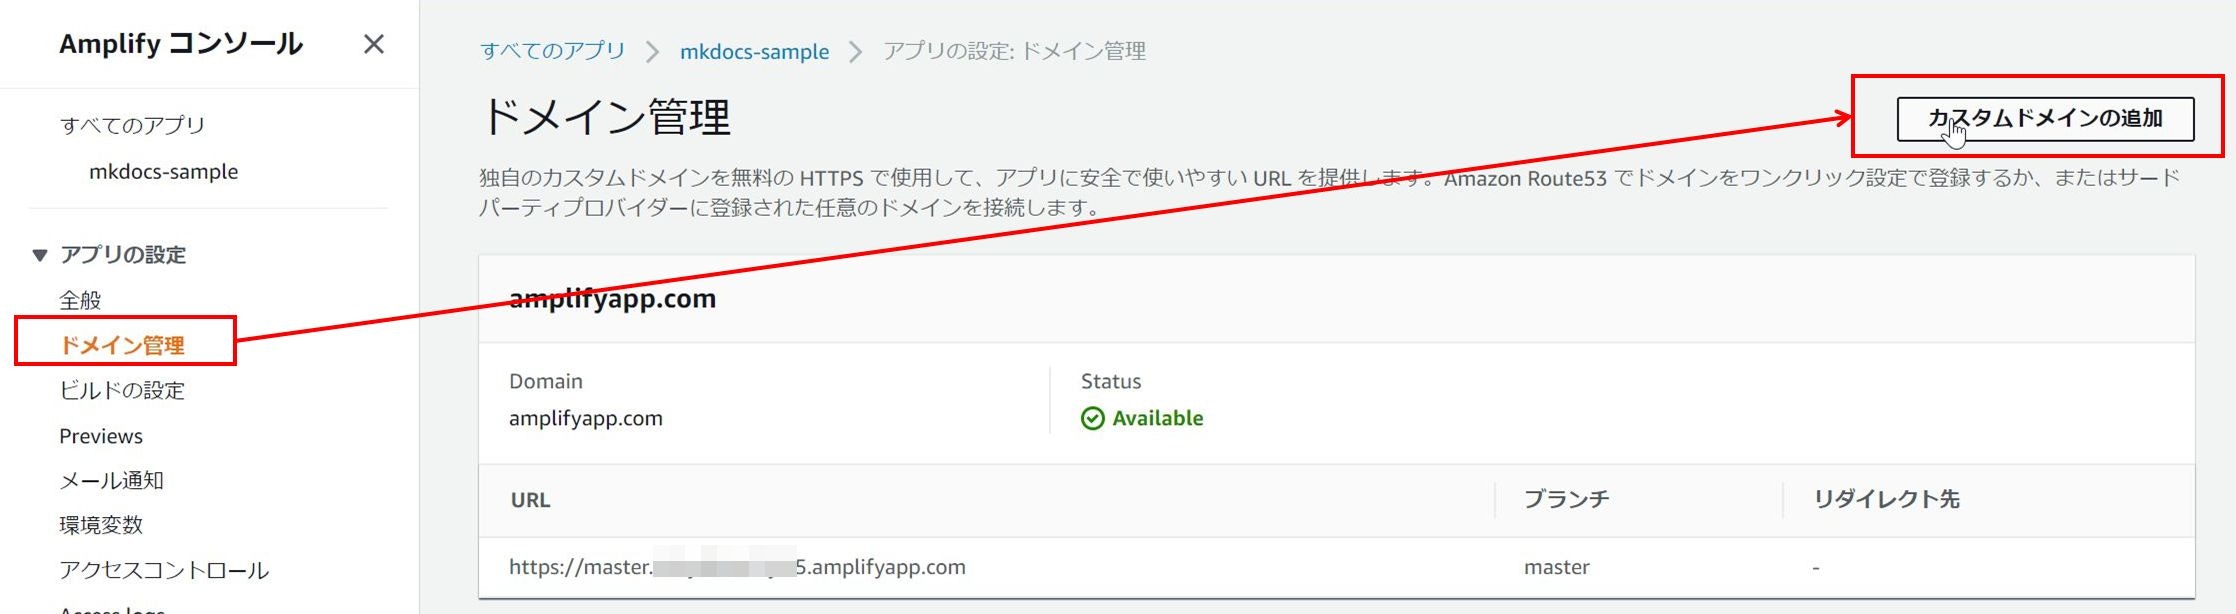 amplify-domain-start.jpg